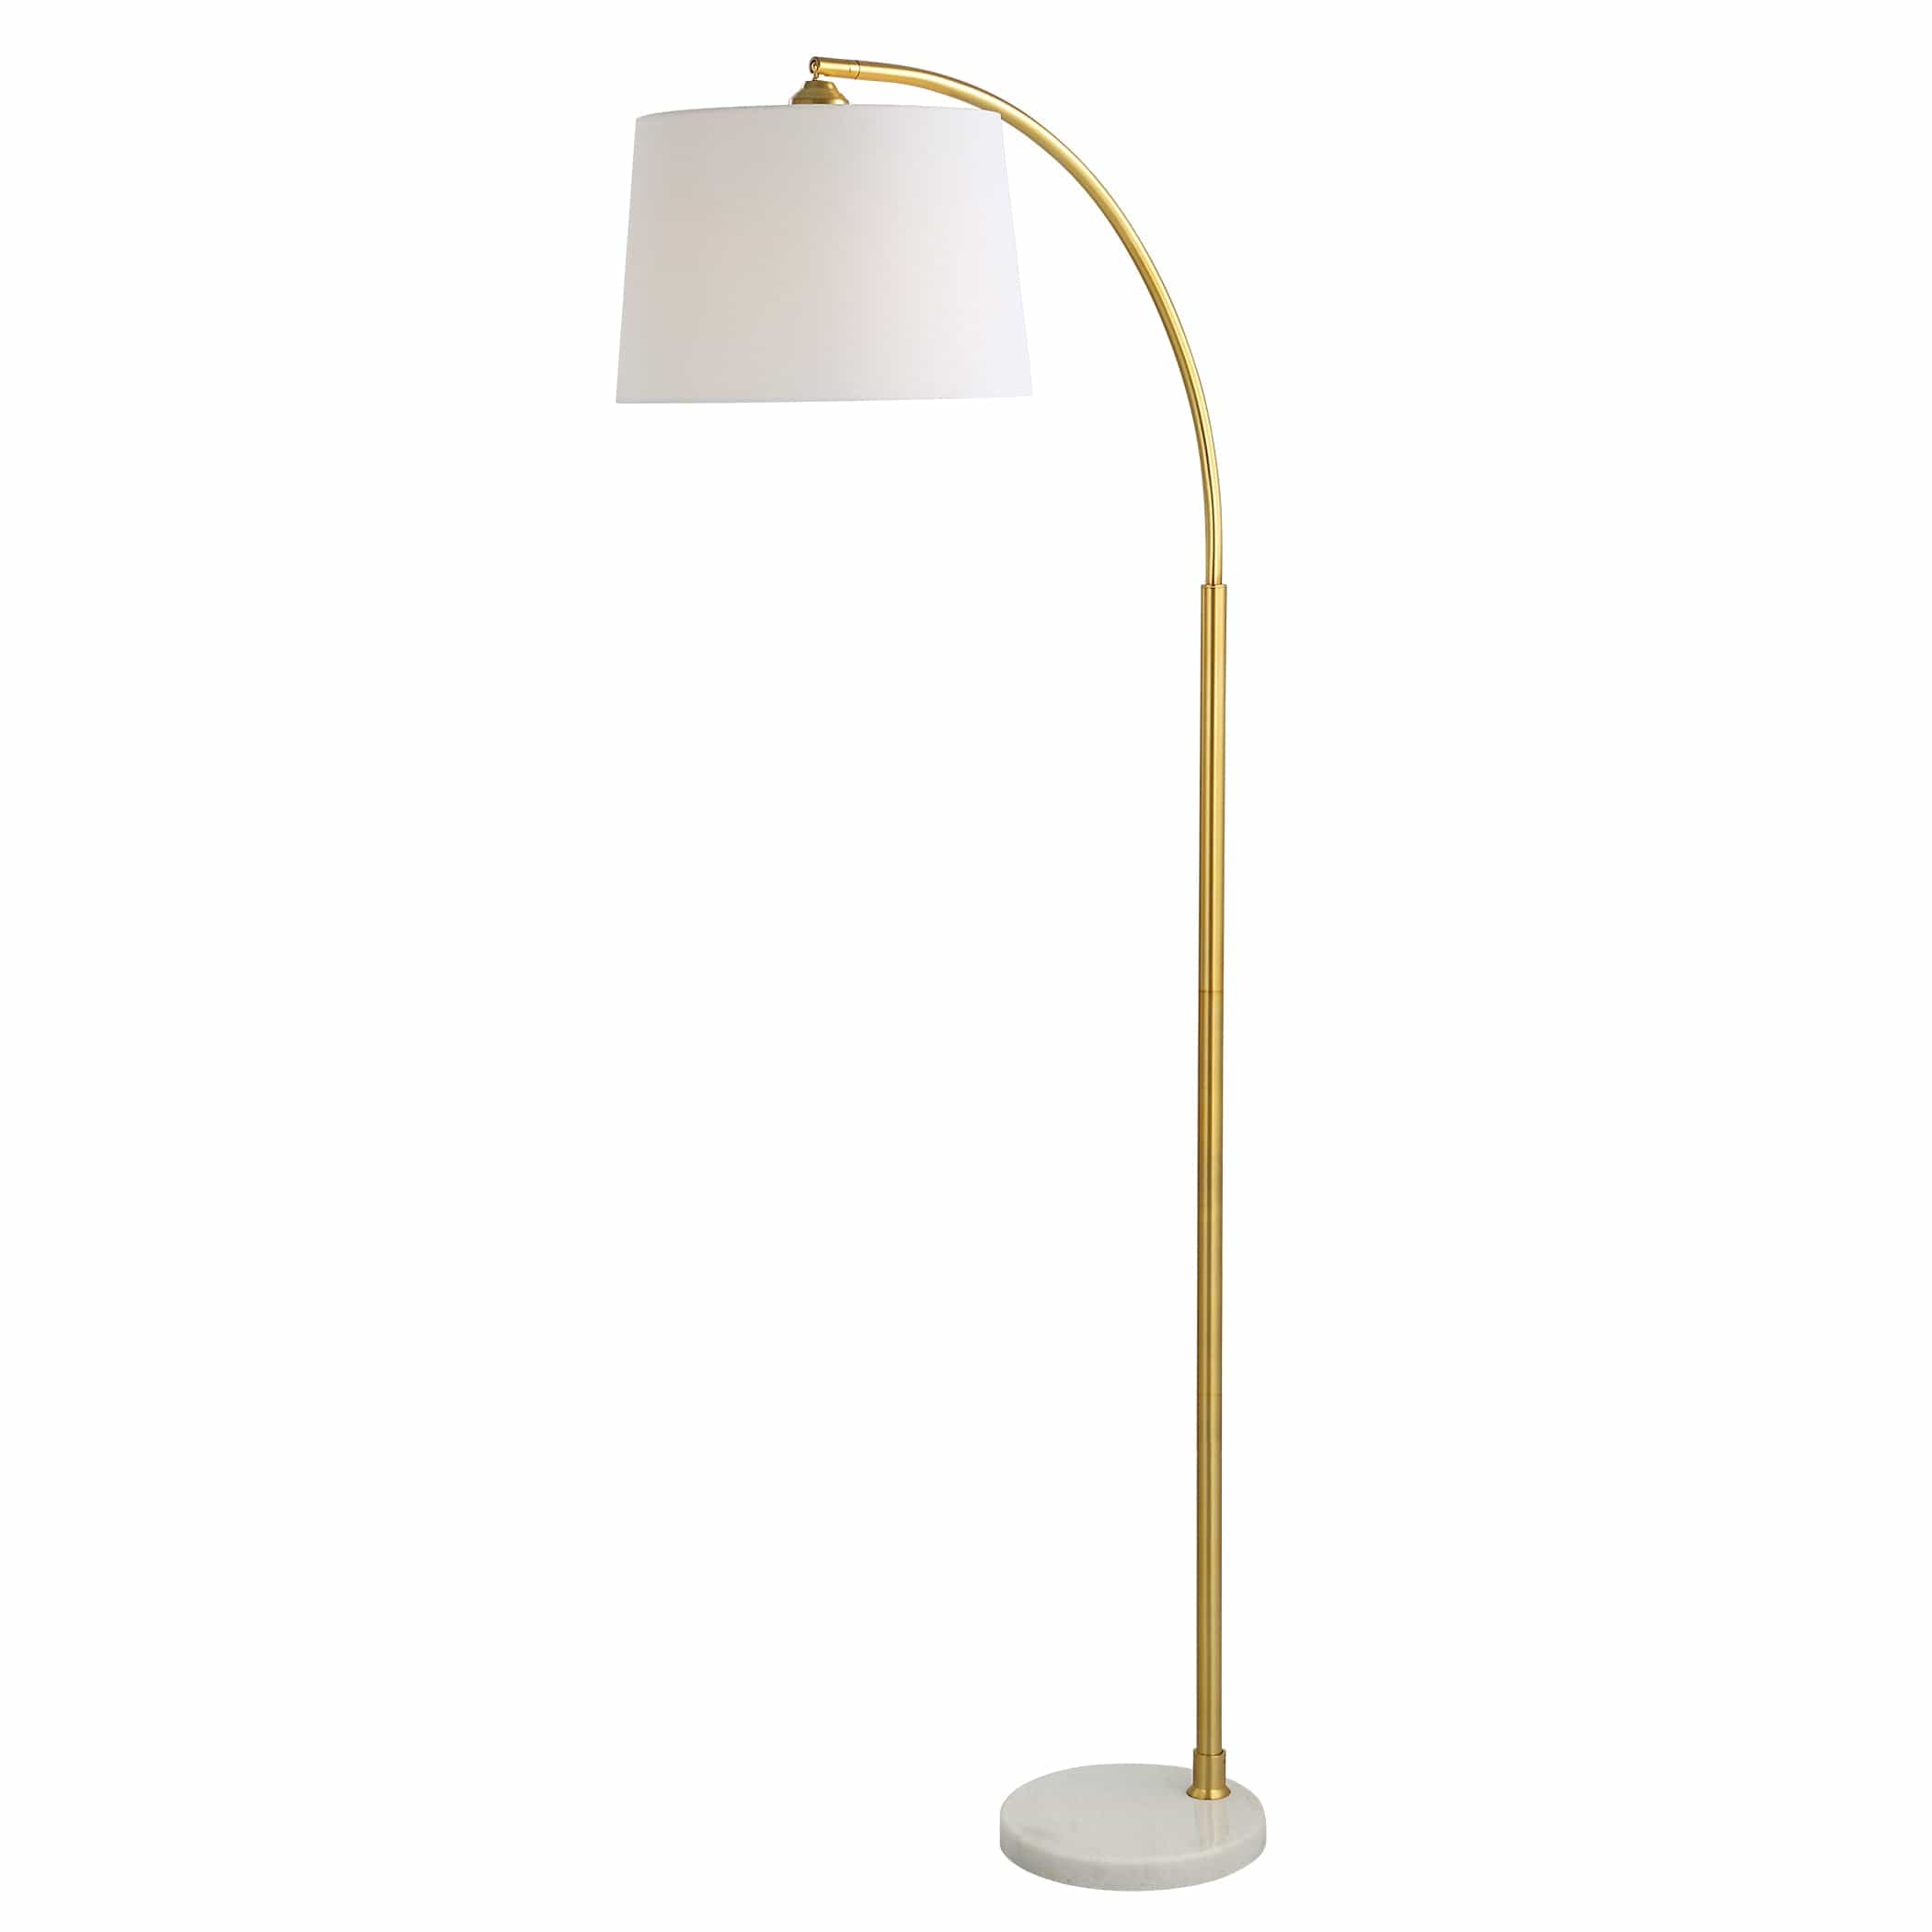 Floor Lamp - w26109-1 Uttermost